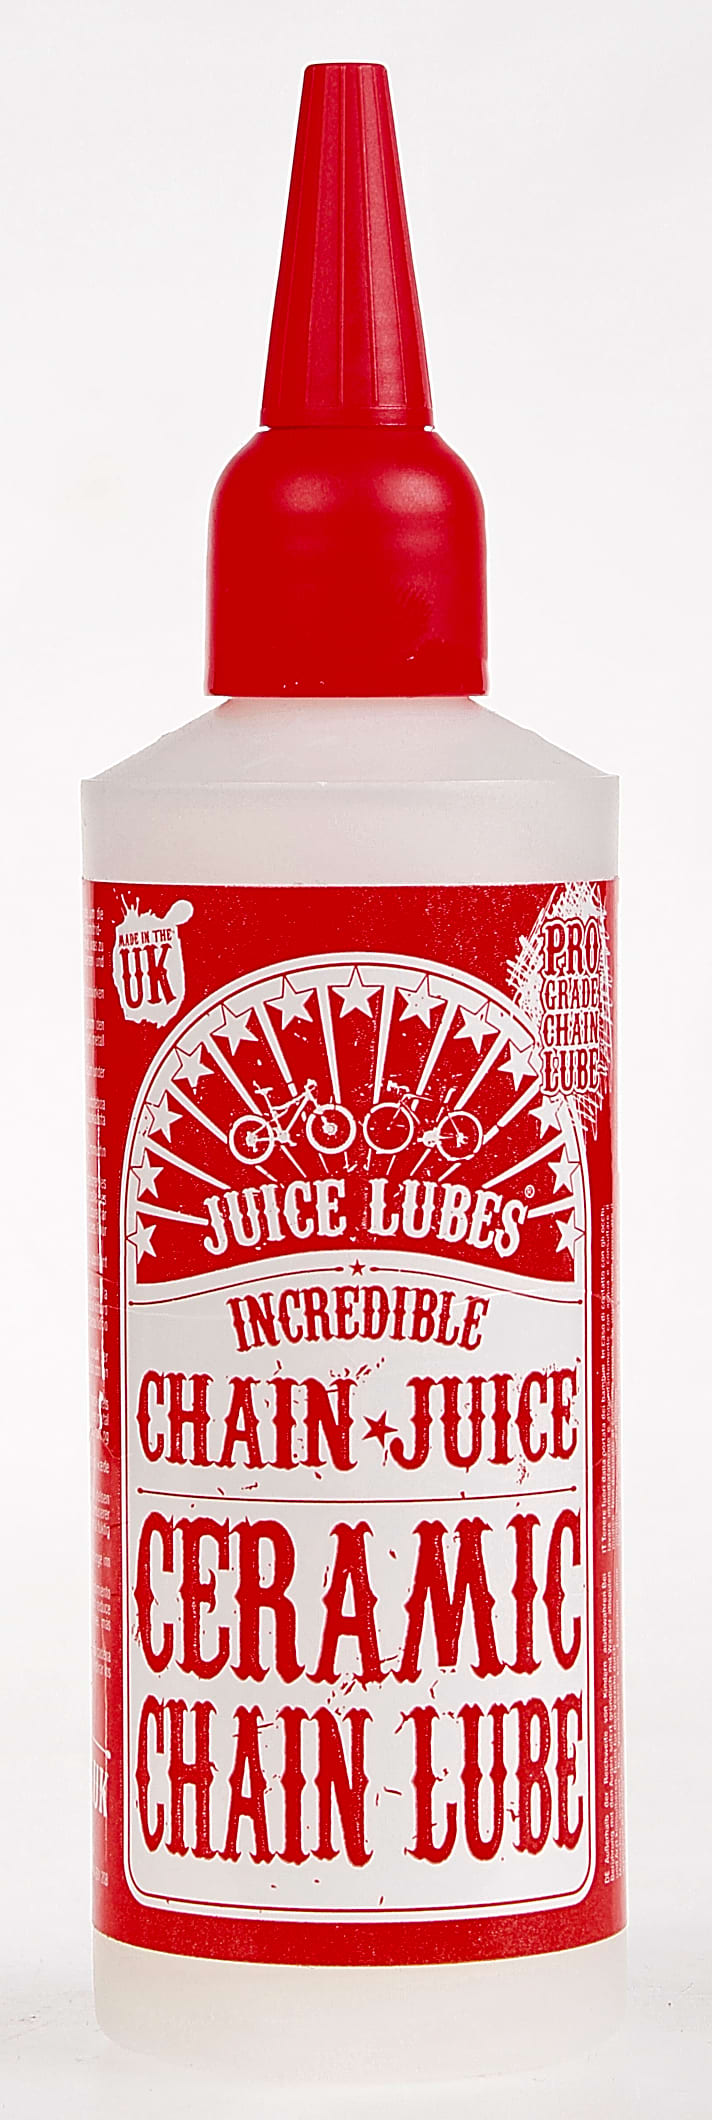   Juice Lubes Chain Juice Ceramic